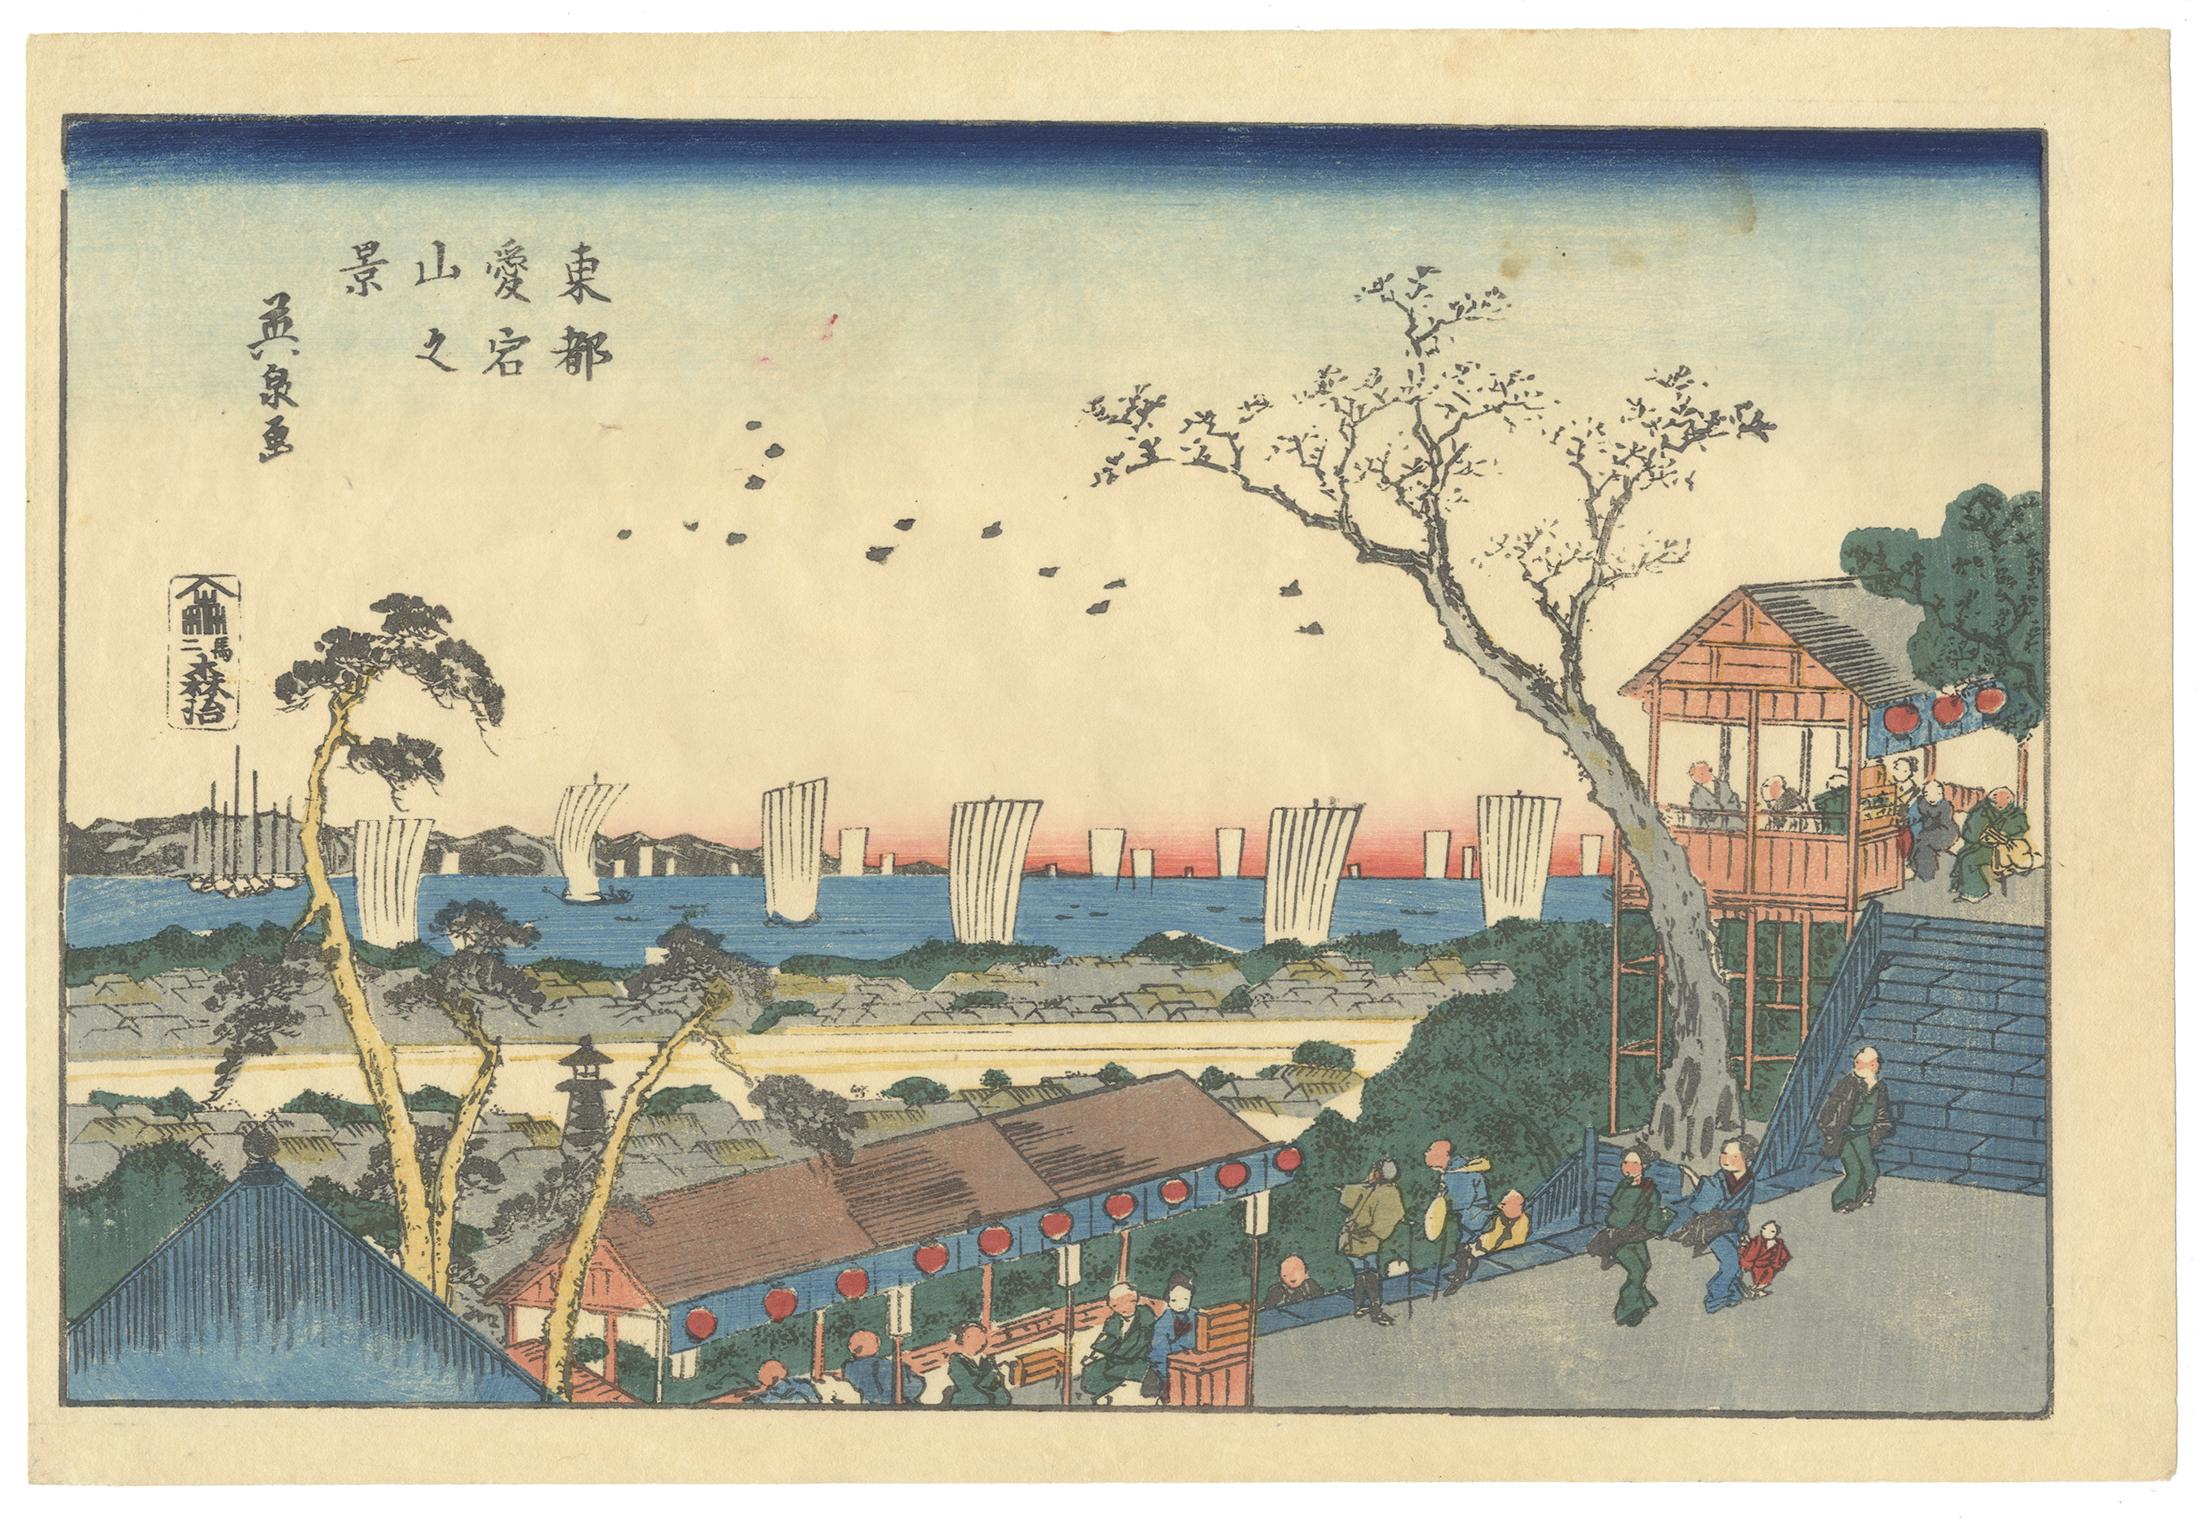 Keisei Eisen Portrait Print - Keisai Eisen, Landscape, Original Japanese Woodblock Print, Ukiyo-e, Edo, Sunset